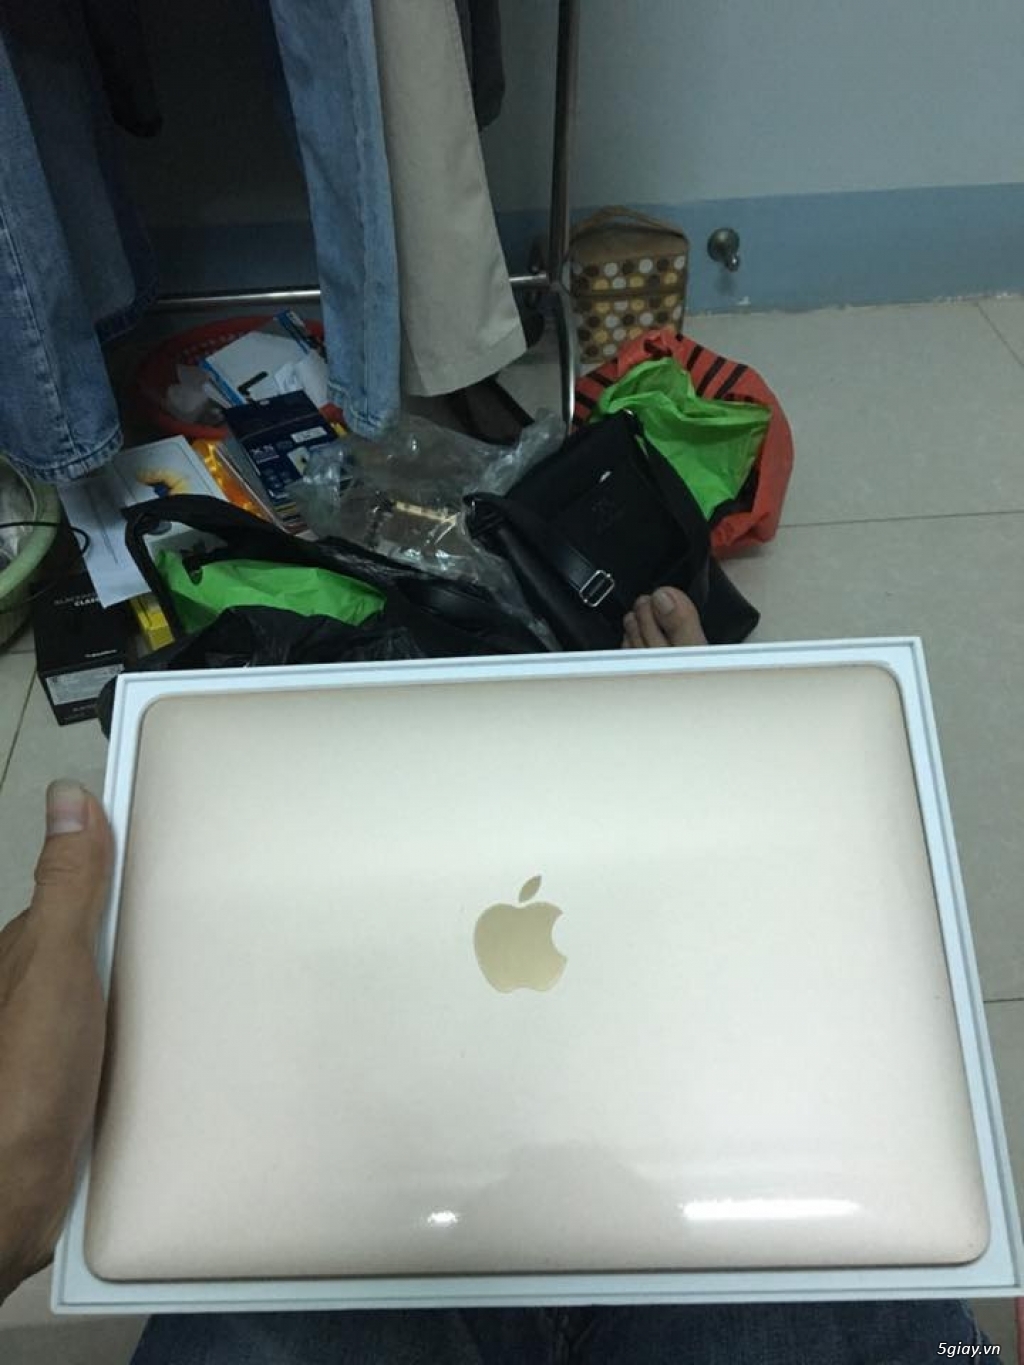 Bán New Macbook Retina 2016_12in_Ram 8G_SSD 256G_Gold